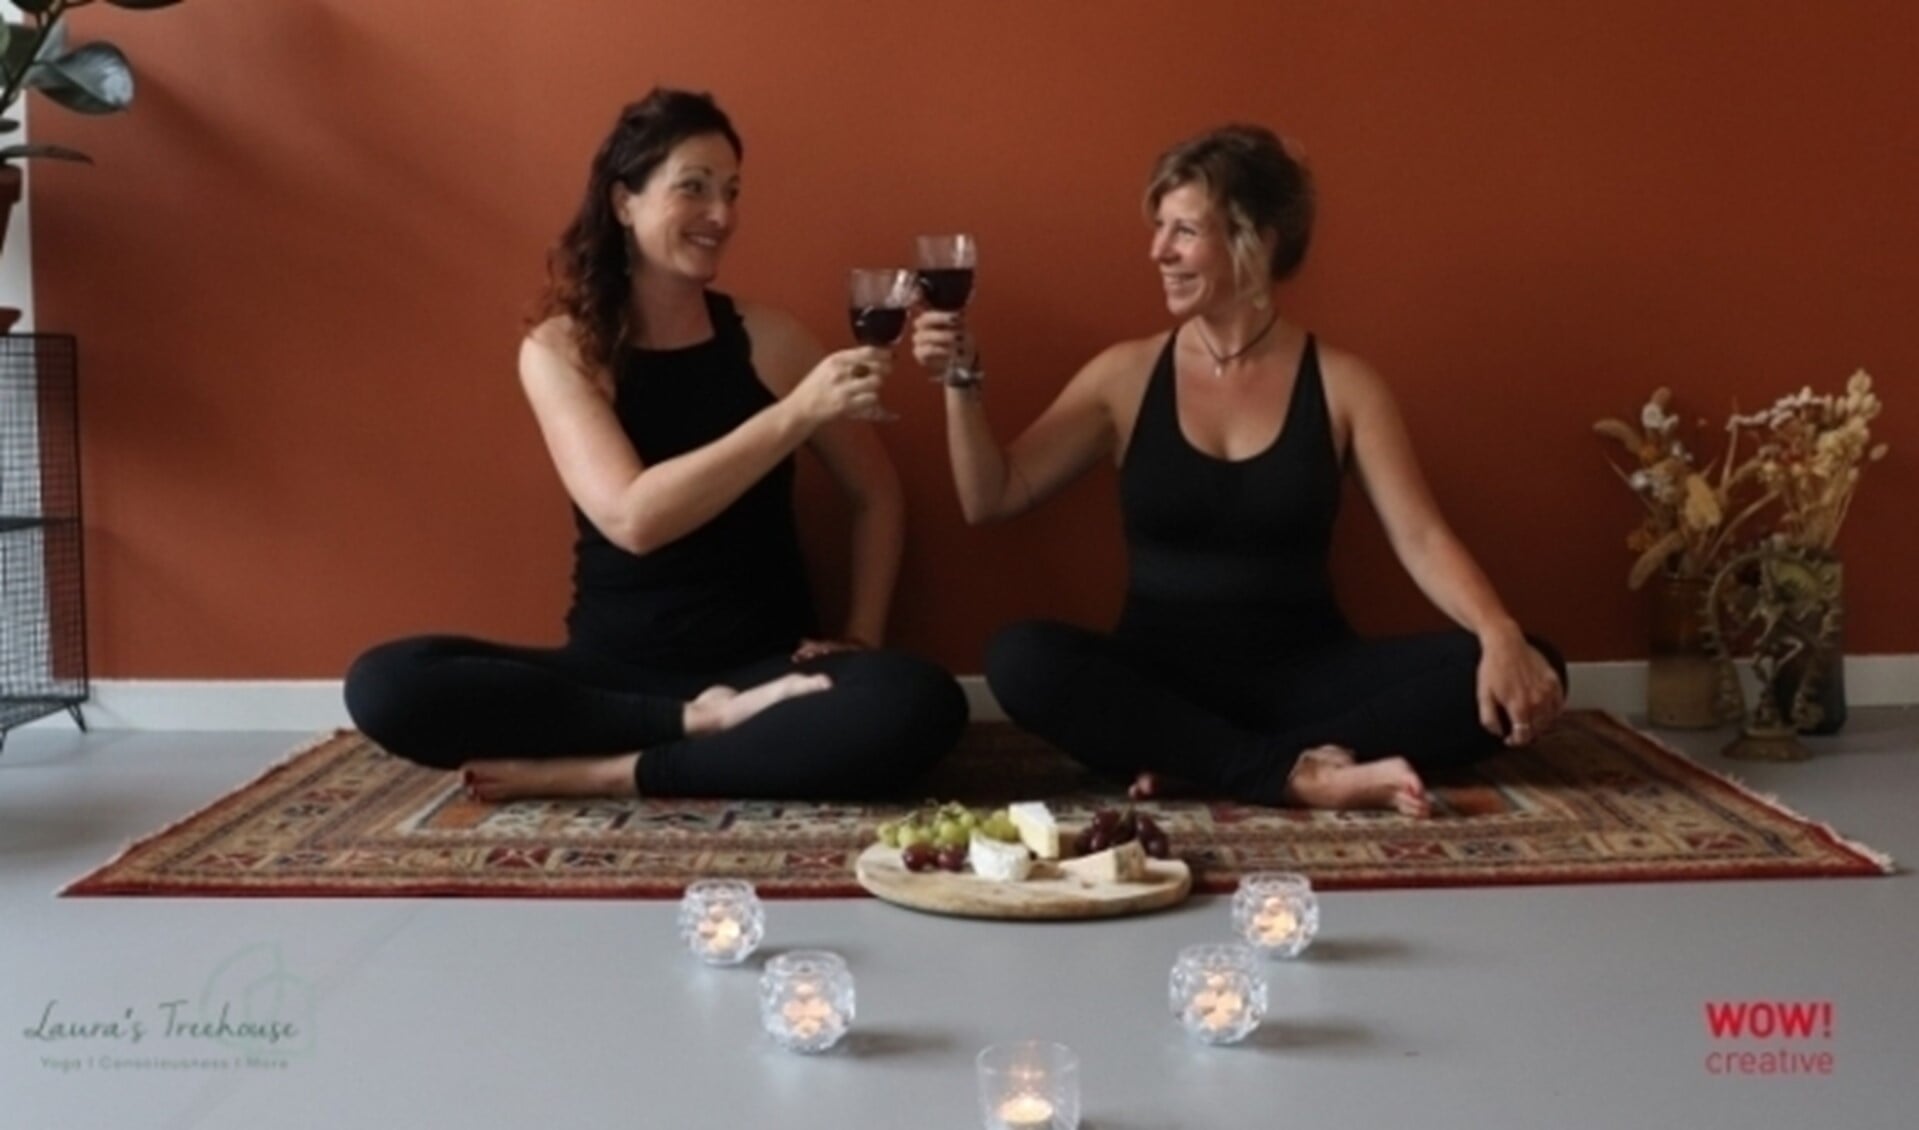 Yoga en wijn gaan gewoon samen op vrijdag 28 februari. Foto: Lianne Huizing